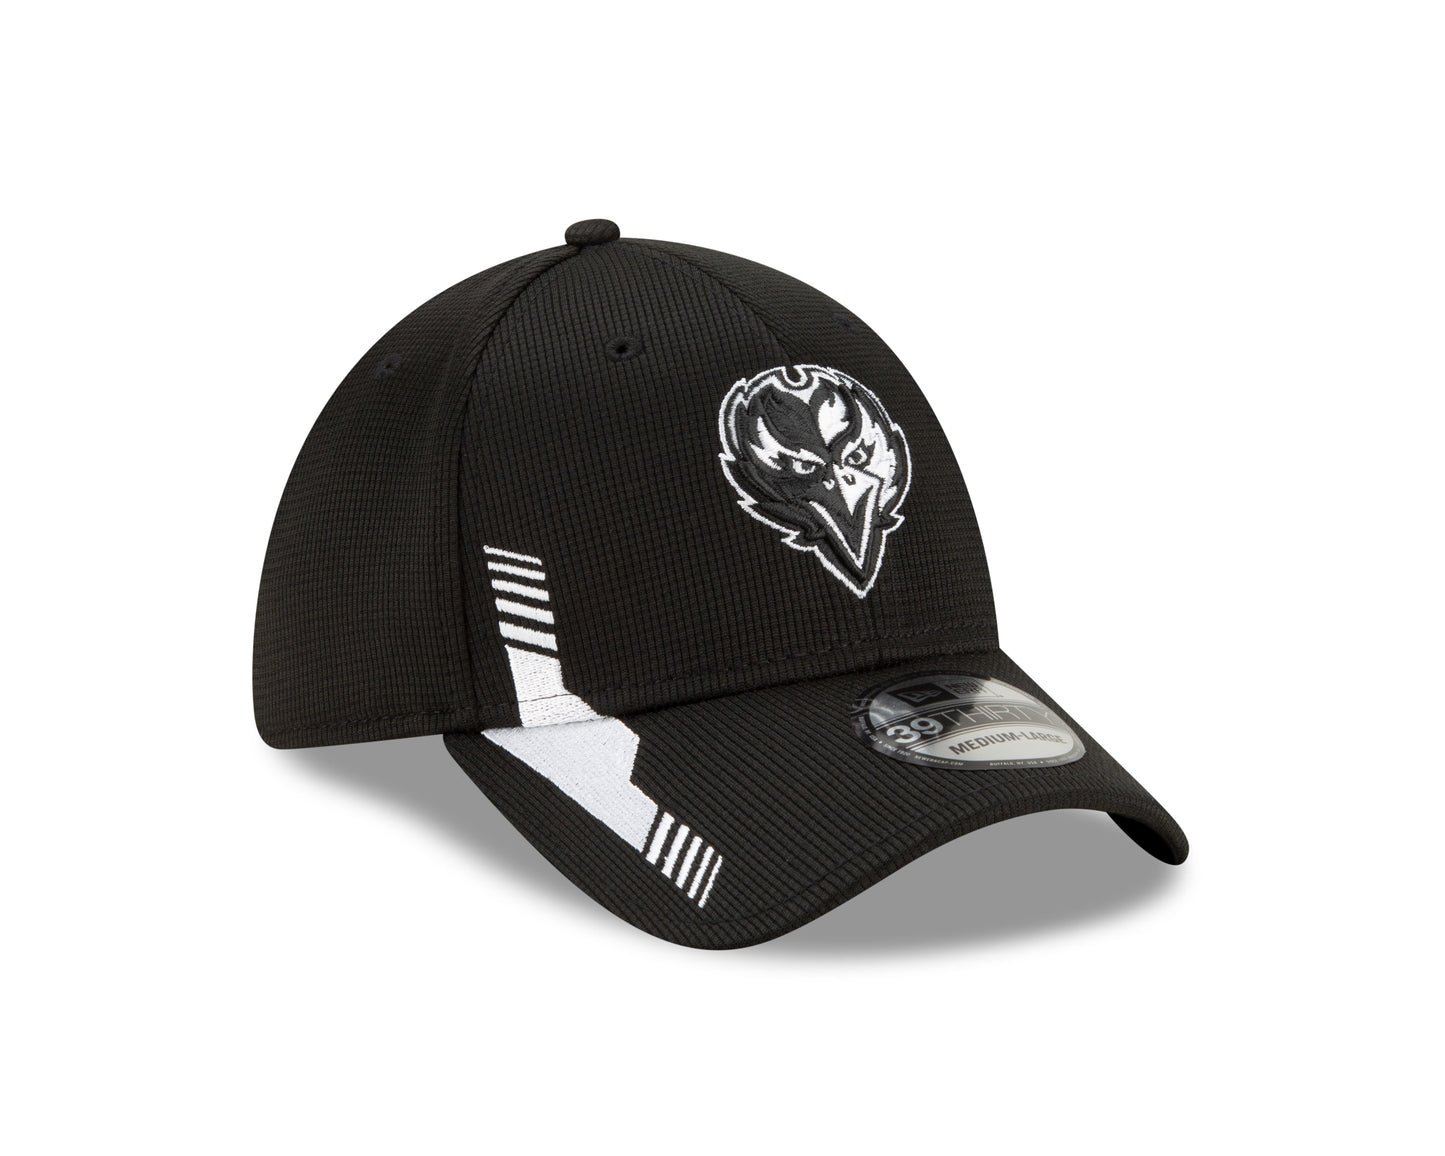 Baltimore Ravens New Era Sideline Black and White 39THIRTY Flex Hat